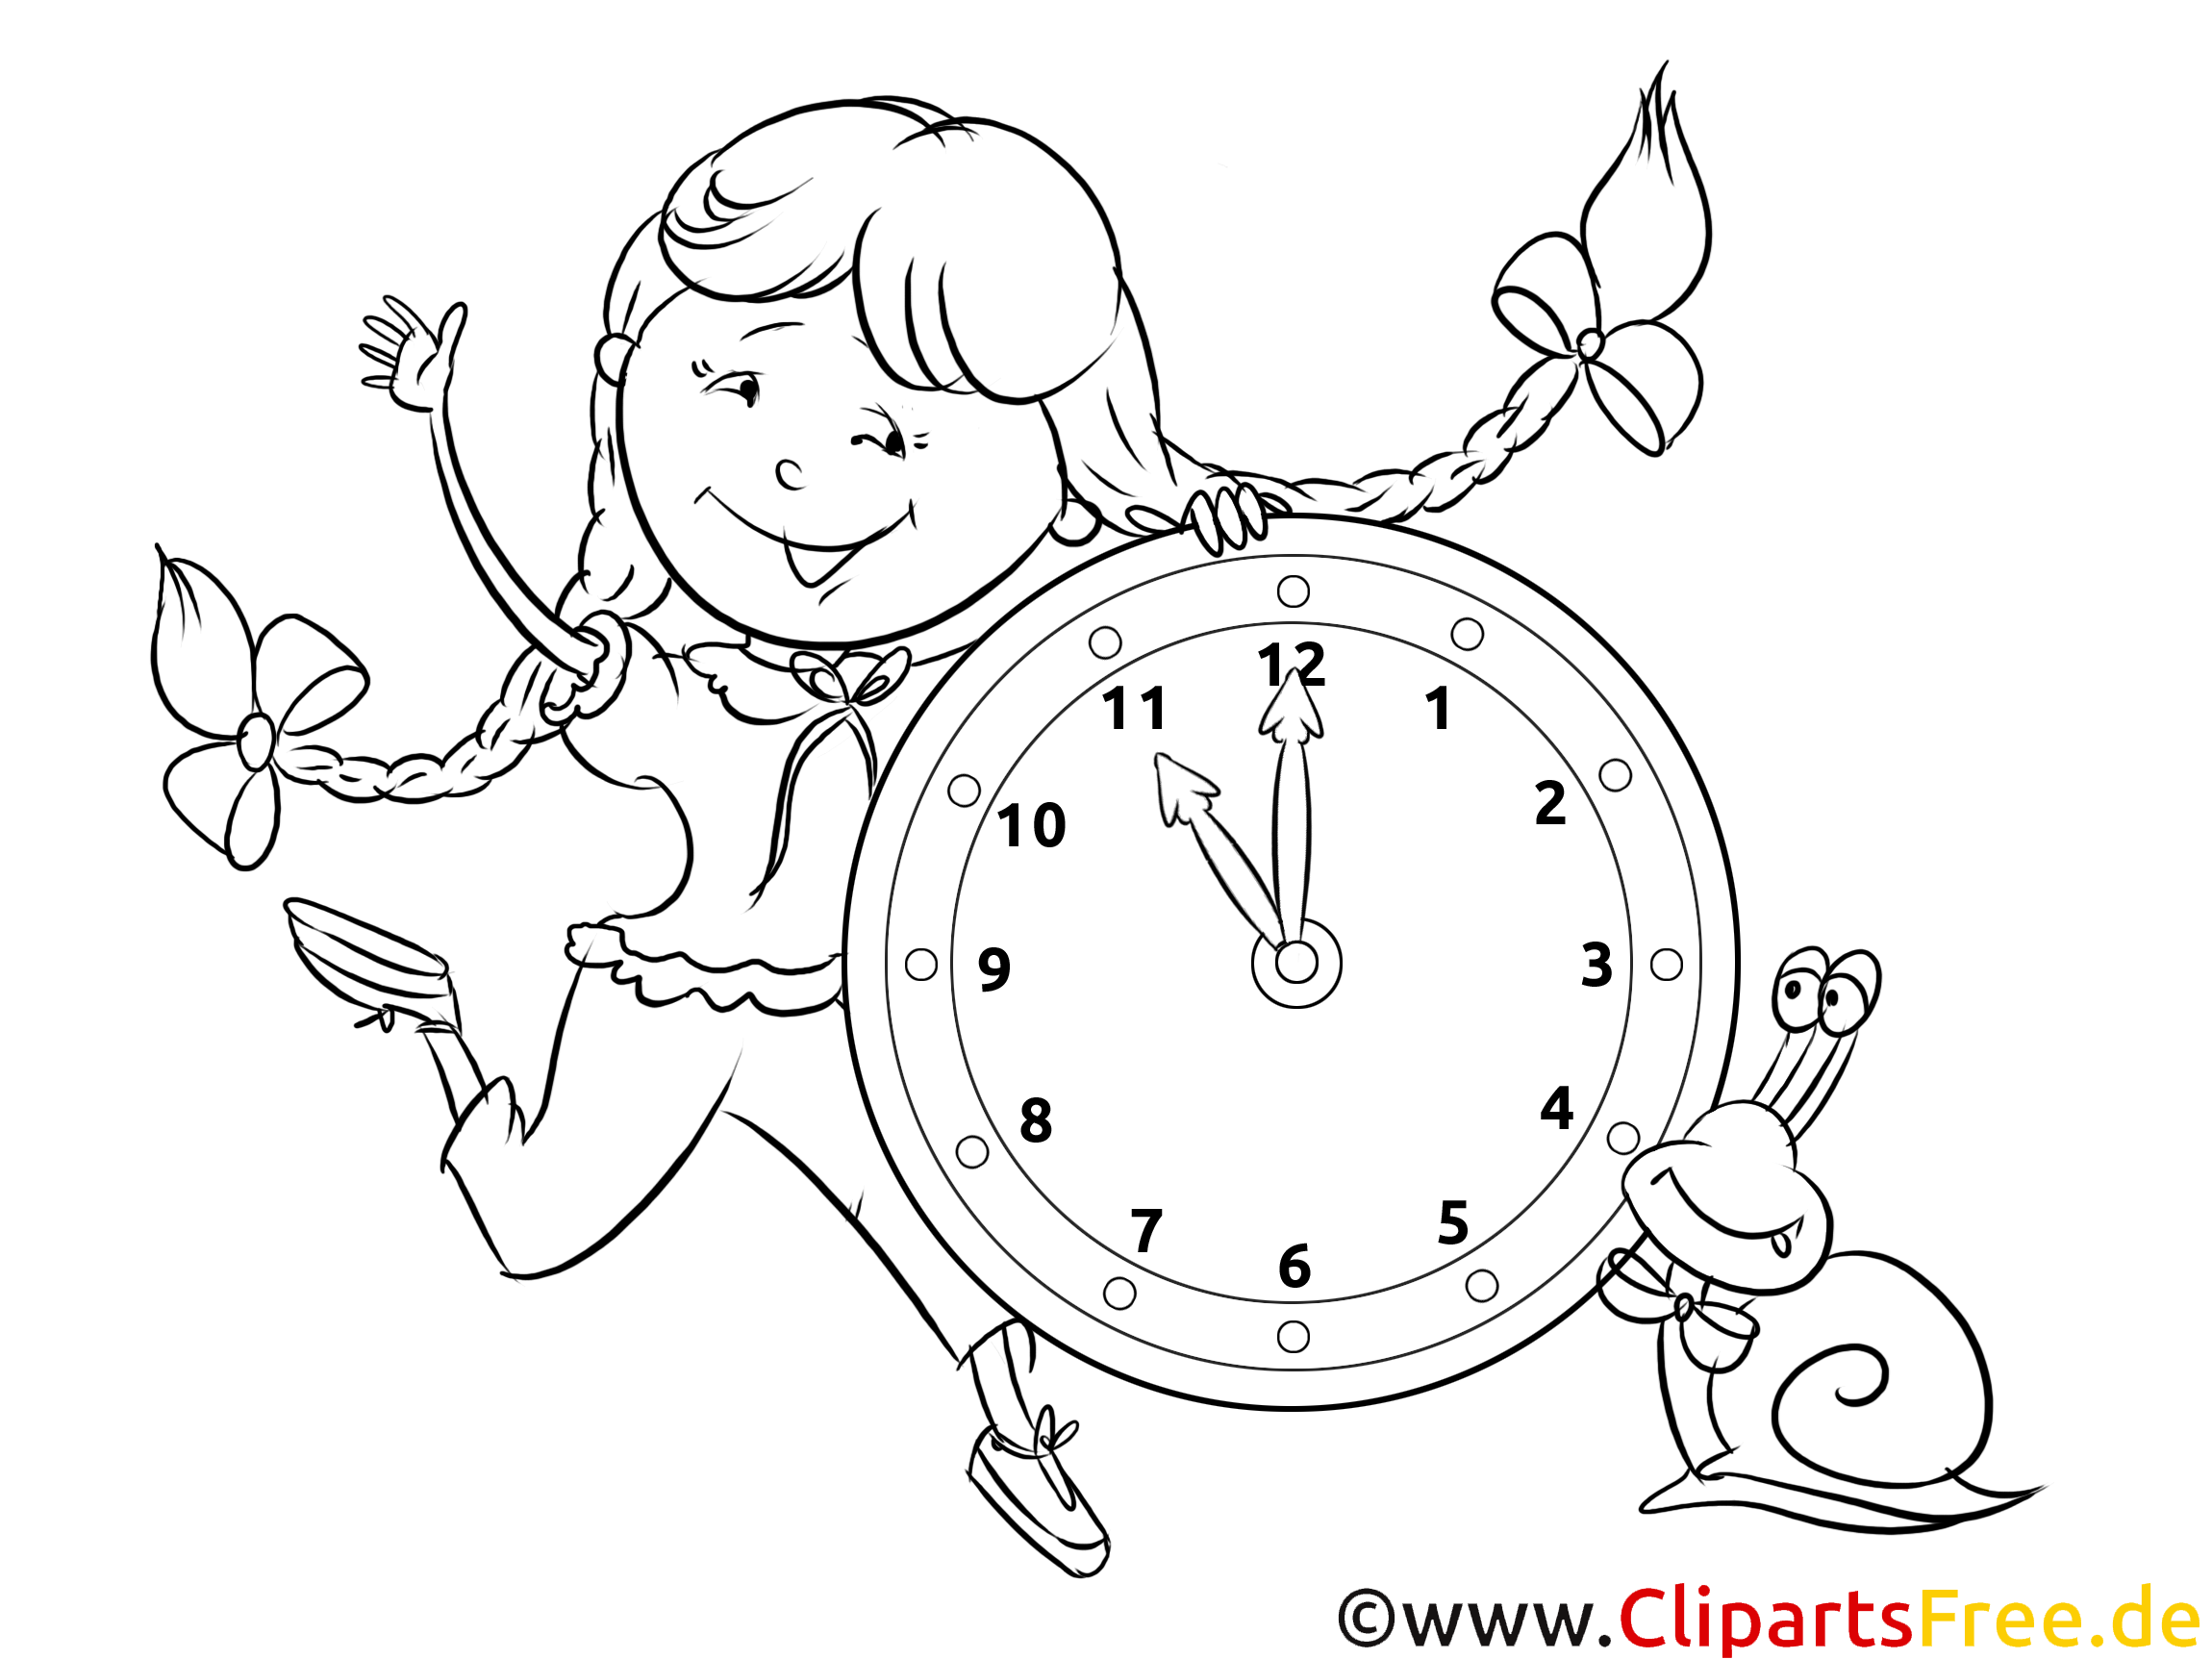 Раскраски часов для детей. Часы раскраска. Часы для раскрашивания для детей. Часы раскраска для детей. Часы детские раскраска.